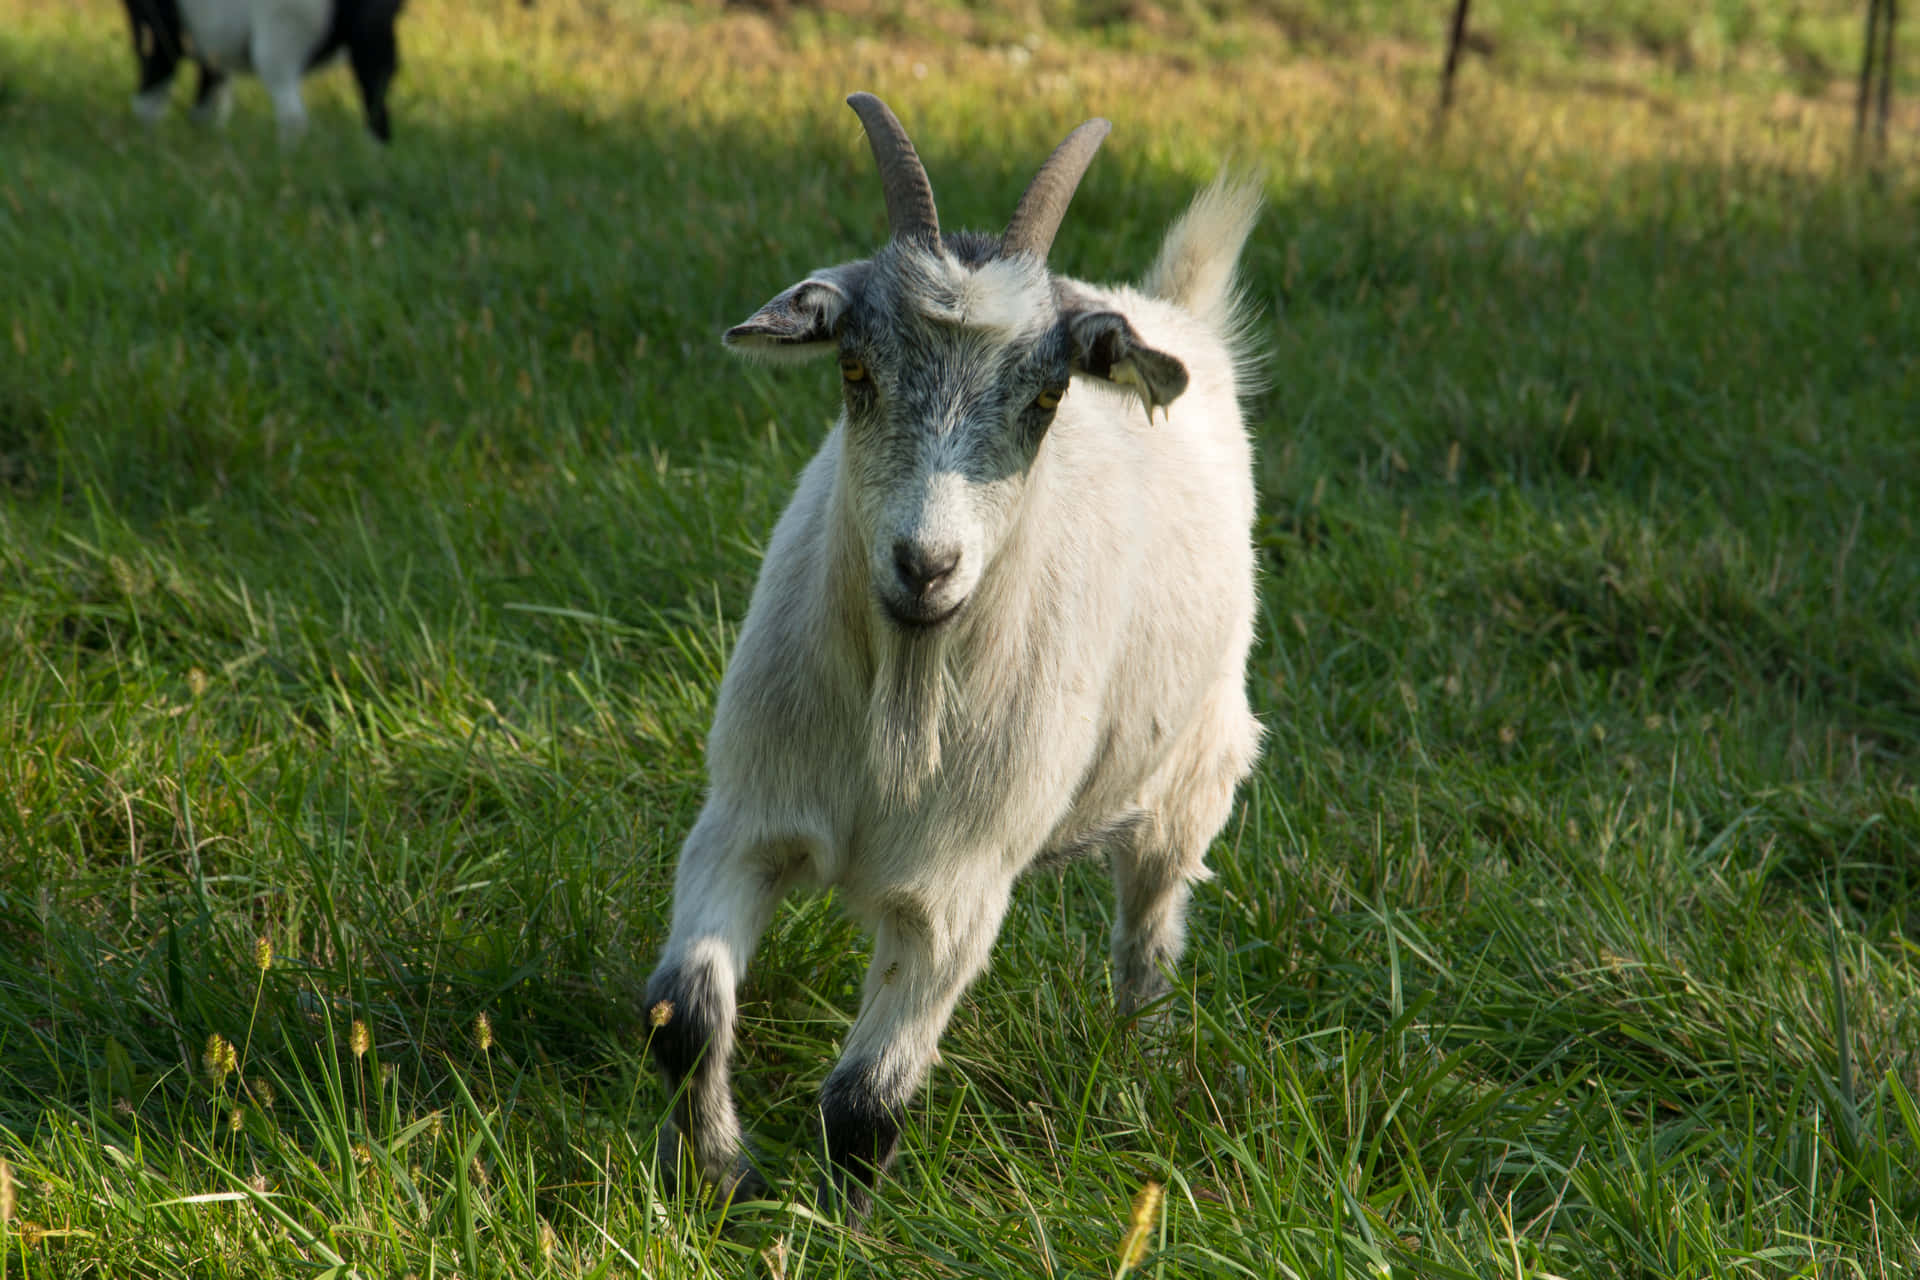 A happy goat posing in a mountainous landscape